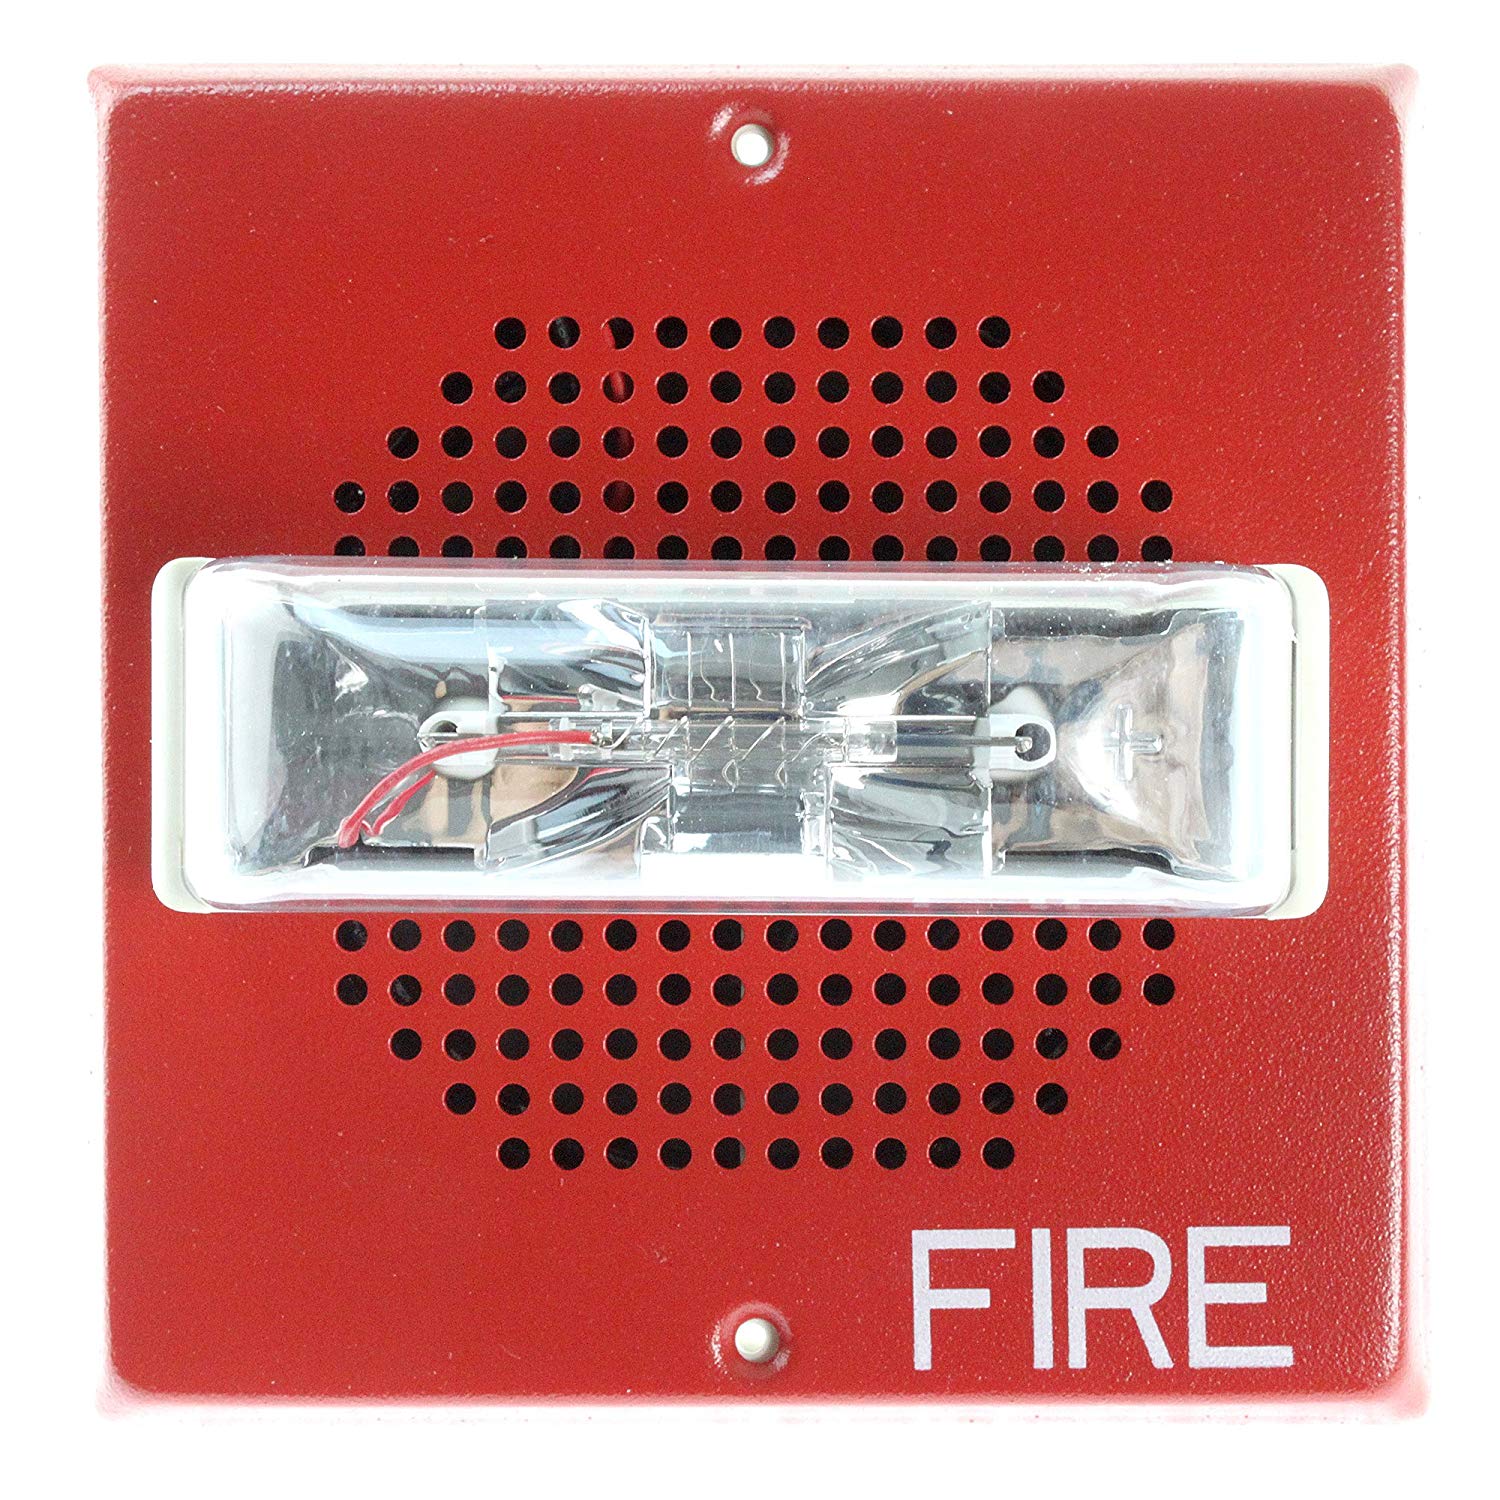 Pair Wheelock Wall Mount Fire Alarm Speaker Strobe E-70-lsm-24 25/70 VRMS for sale online 